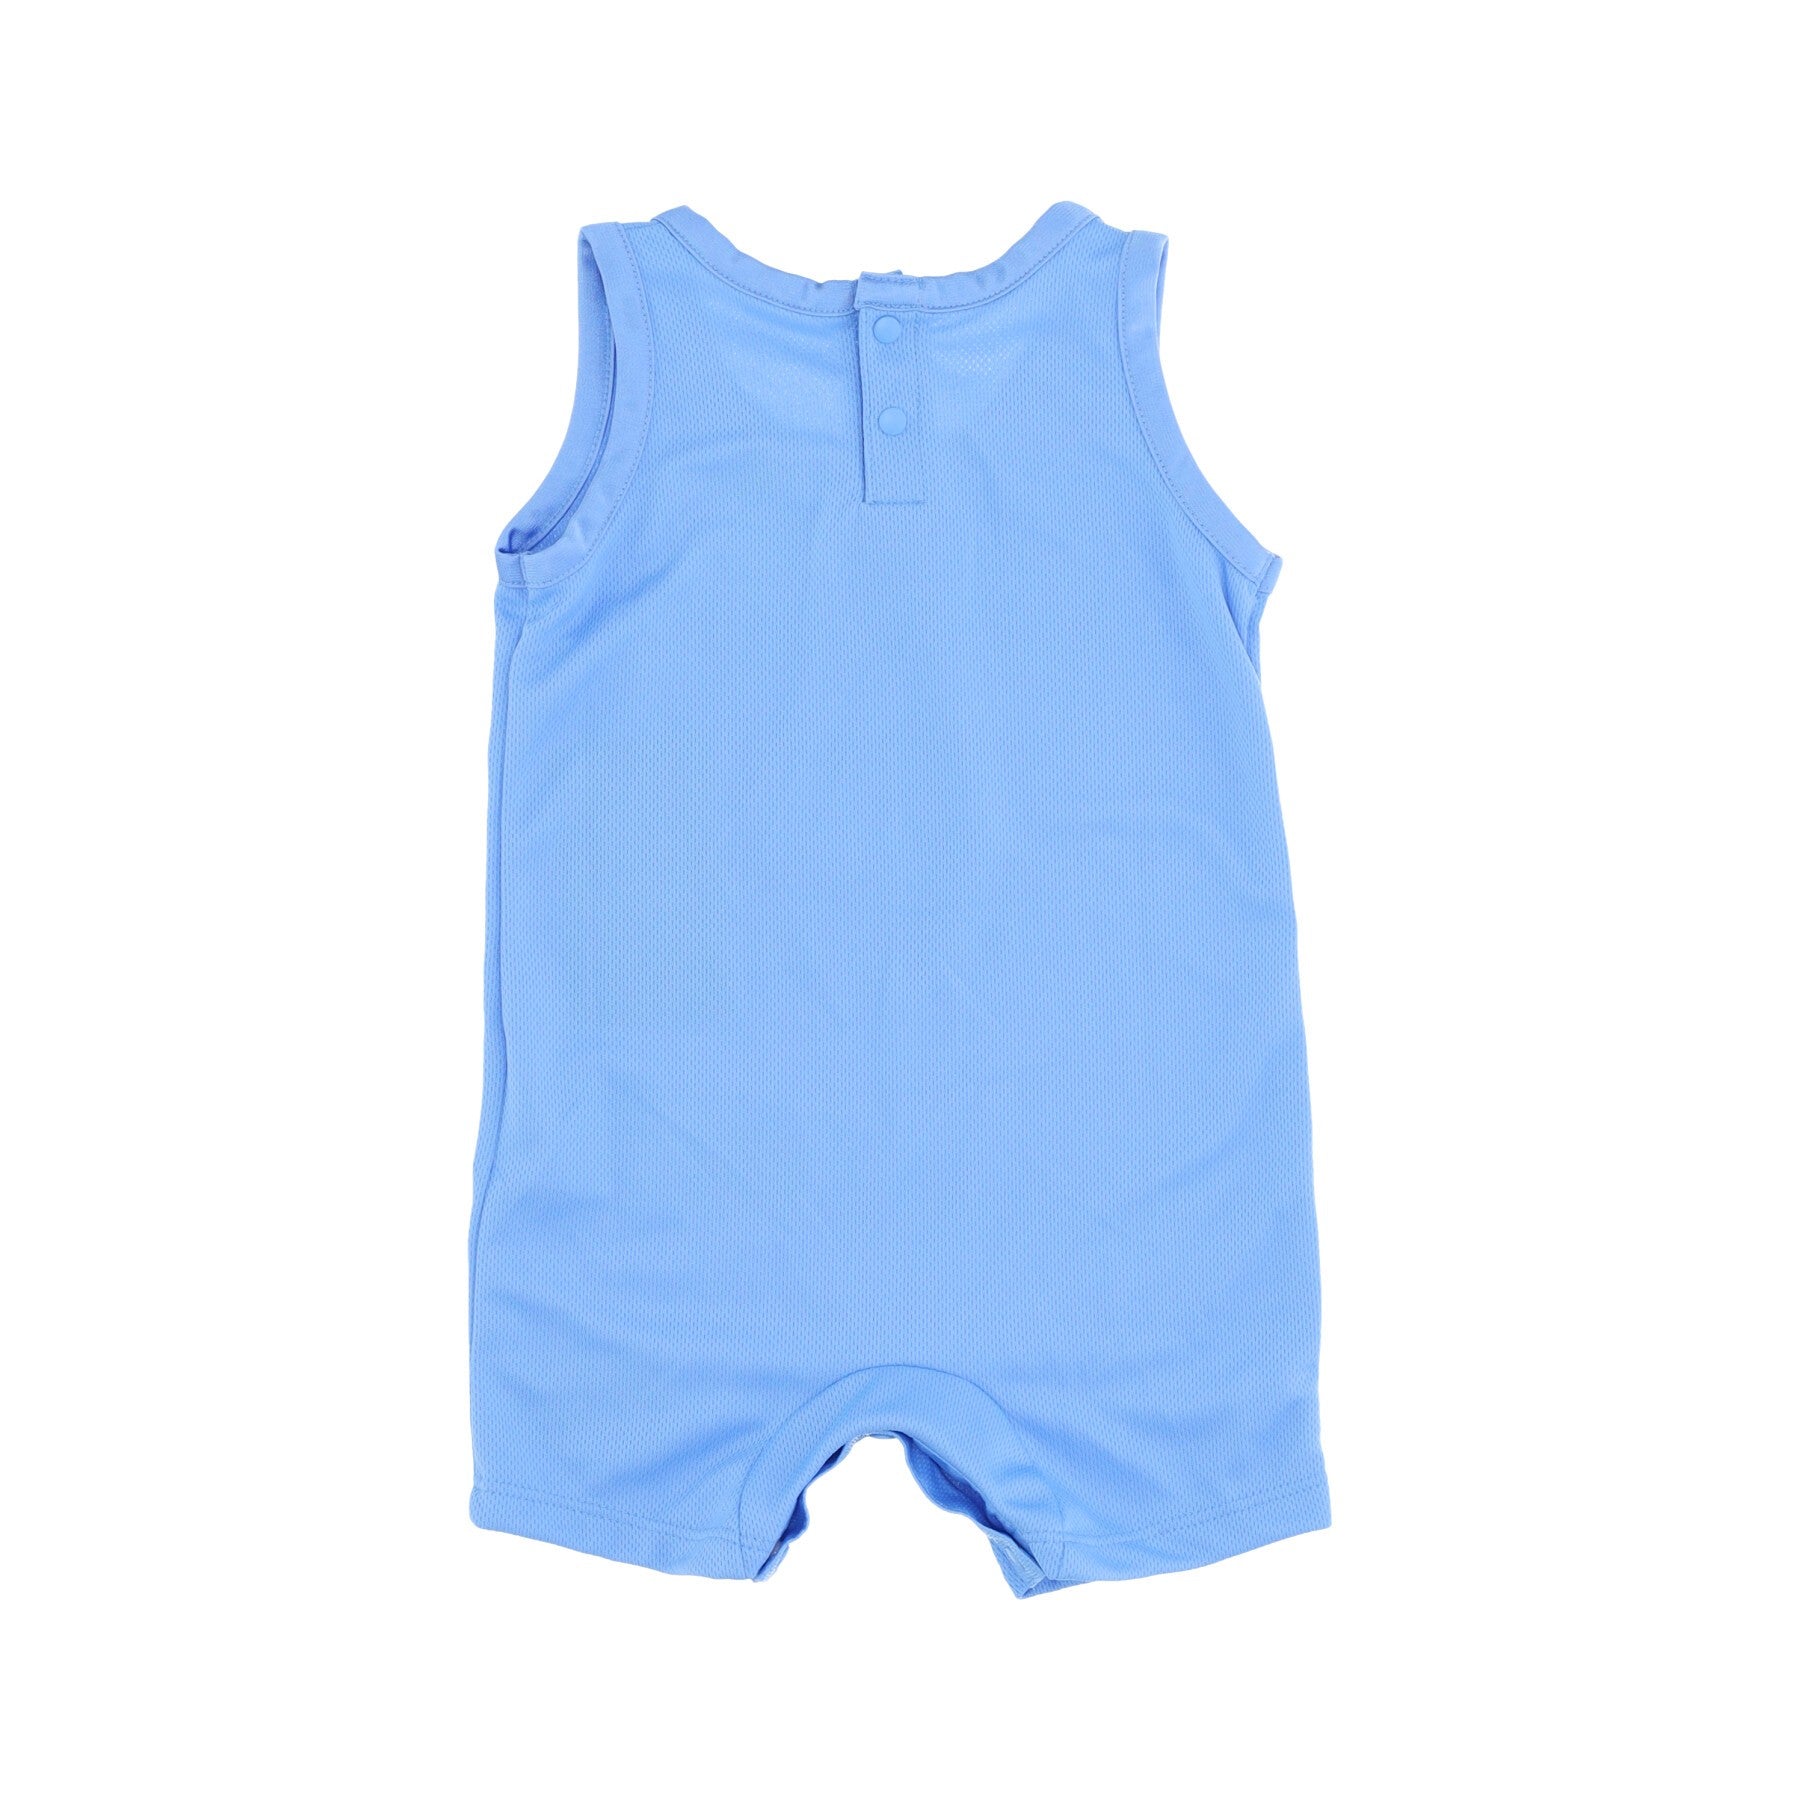 Baby Bodysuit Hbr Jordan Jersey Romper University Blue